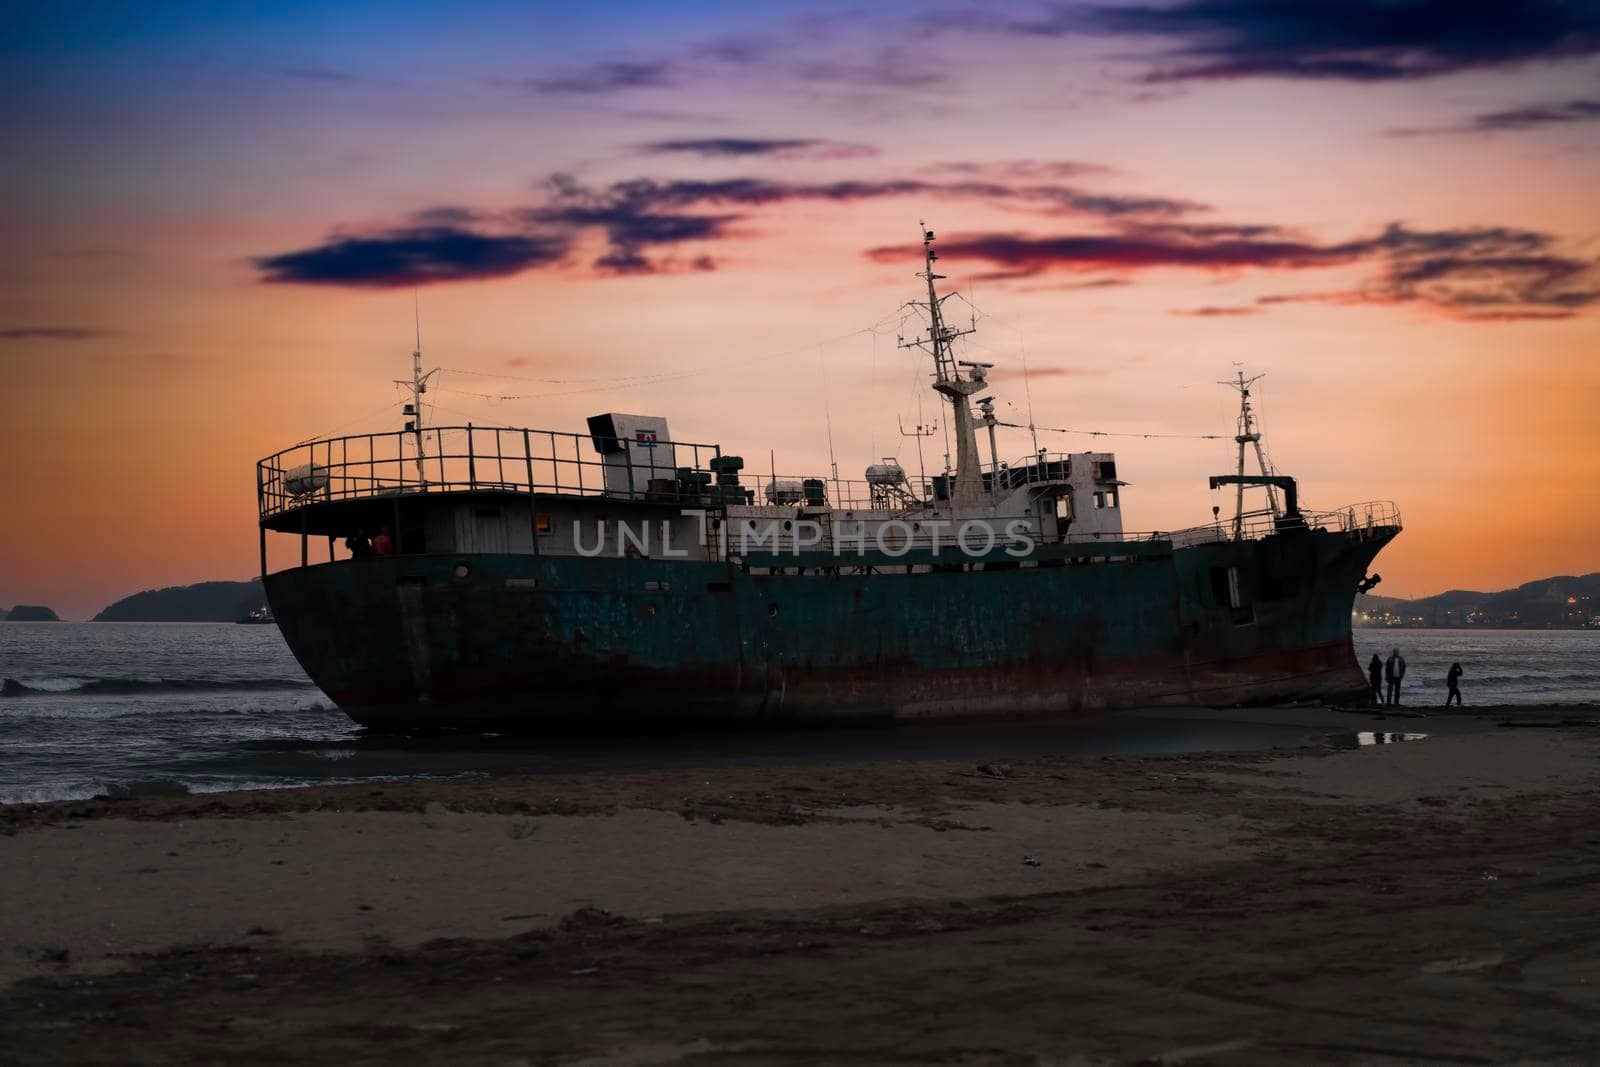 Shipwreck off the coast of Nakhodka, Primorsky Krai by Vvicca